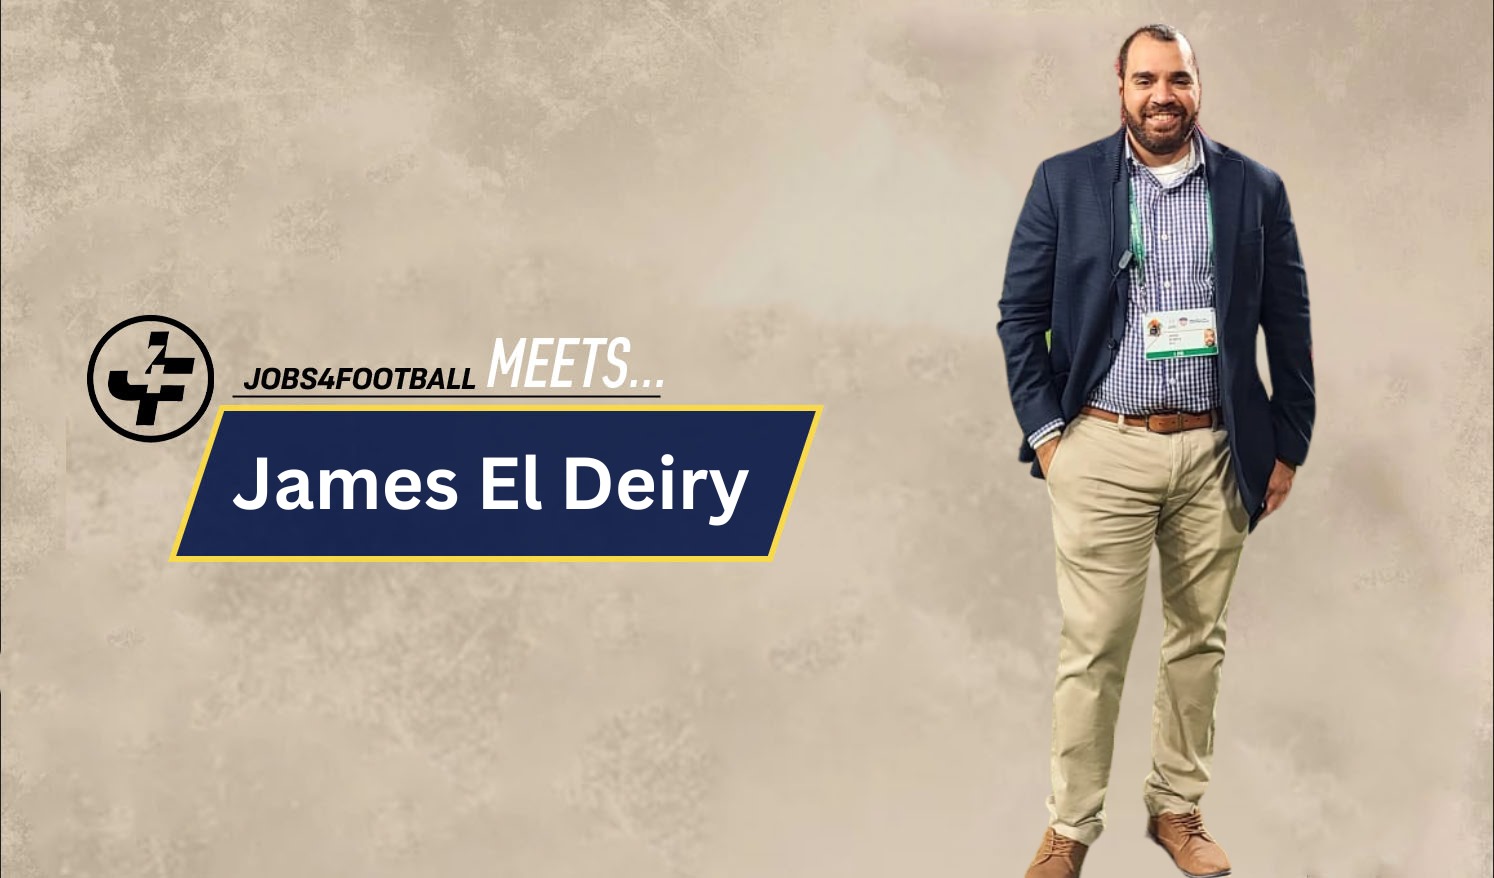 James El Deiry meets